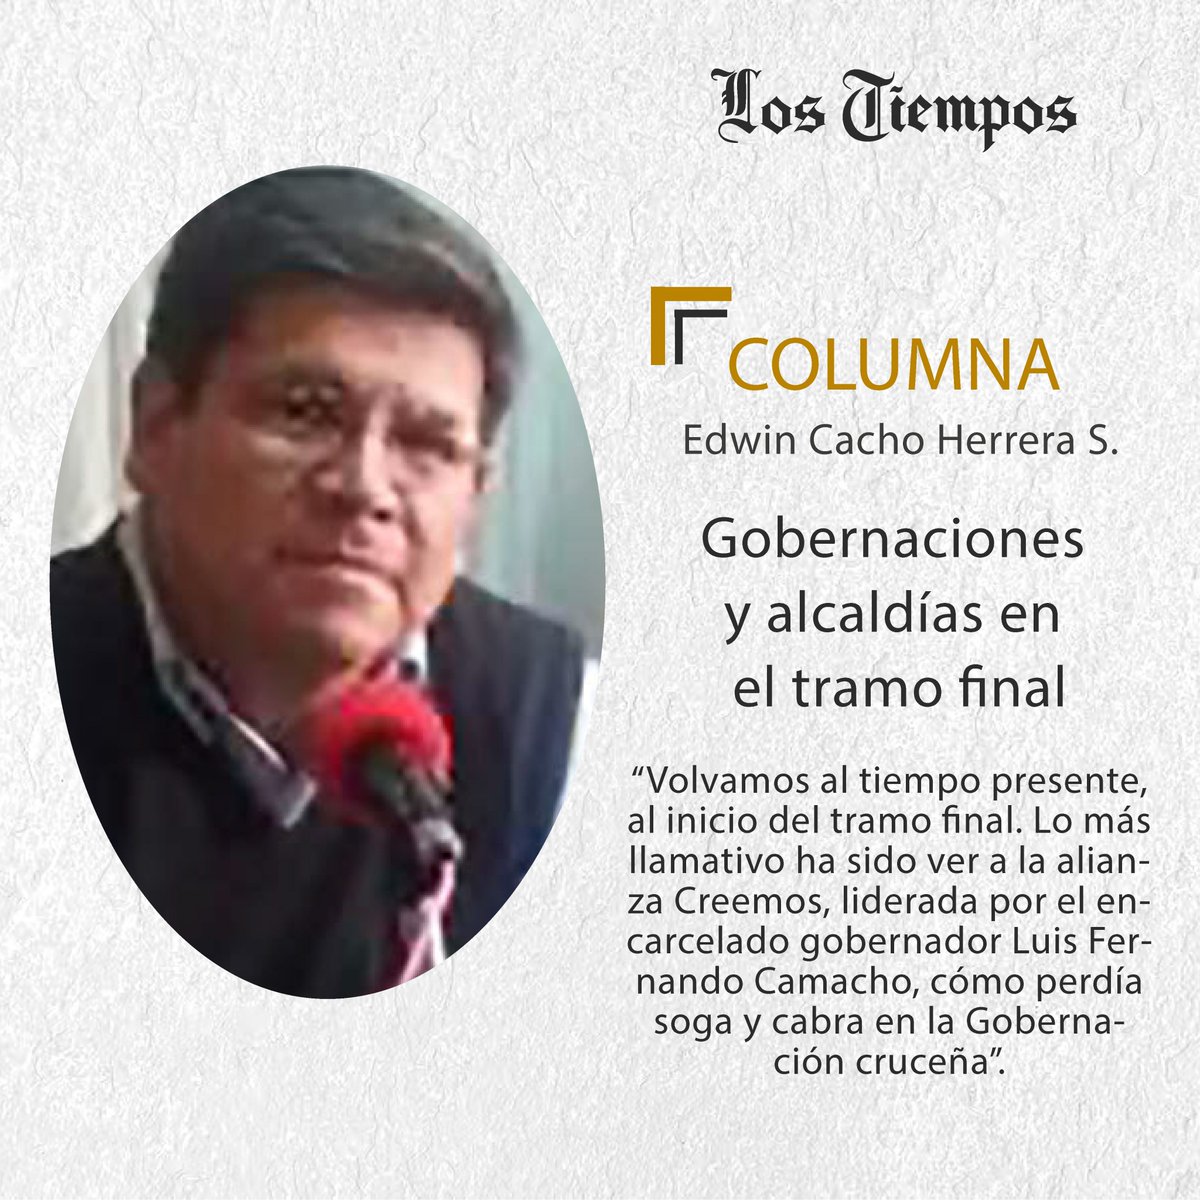 #LTColumna #Puntos de Vista
Lea la columna de Edwin Cacho Herrera Salinas.
👉 tinyurl.com/mw59umj3